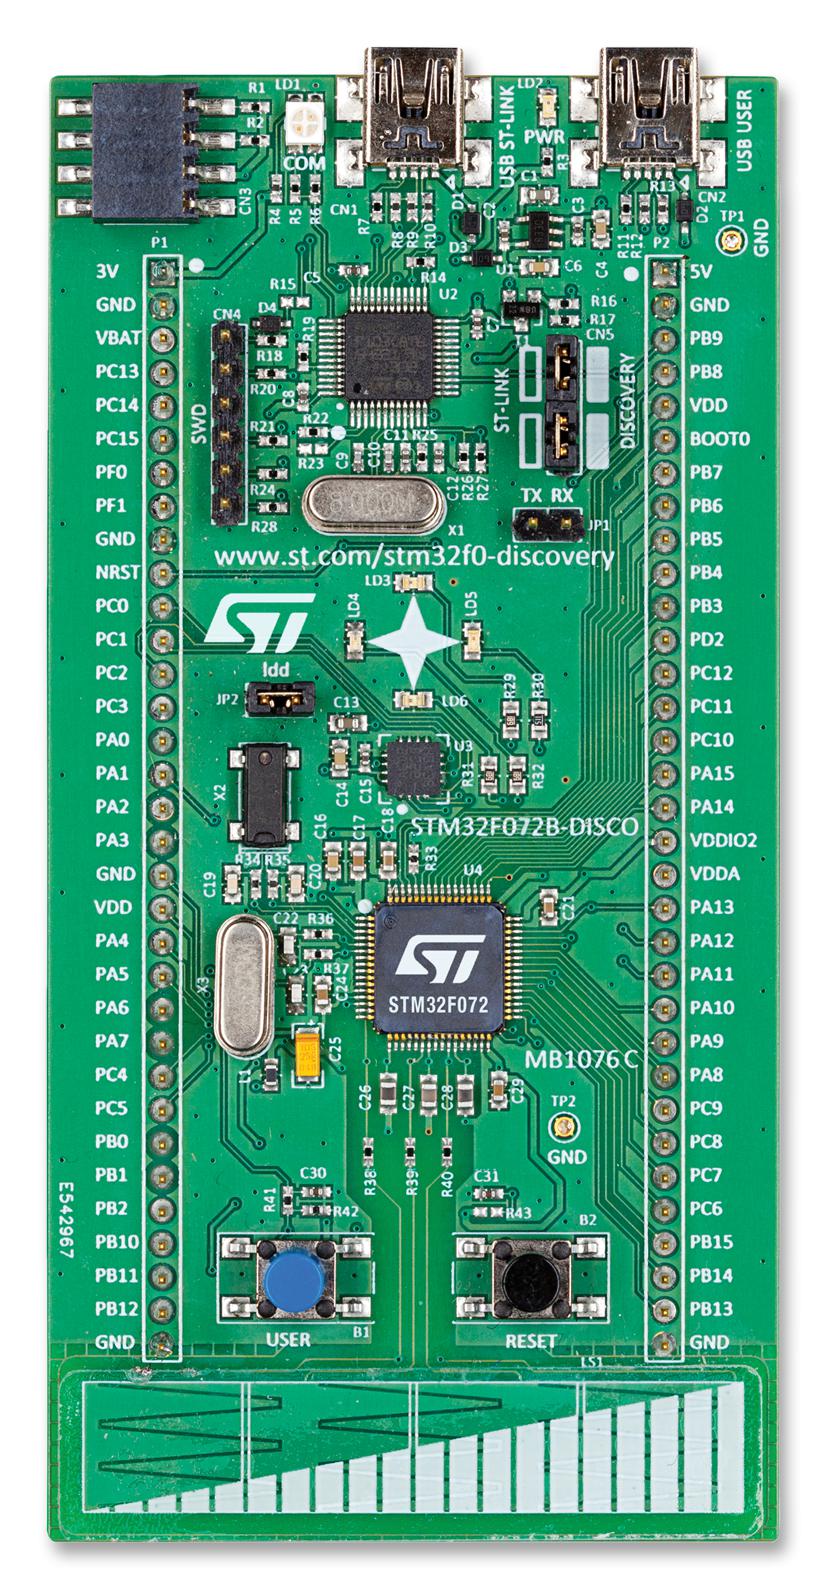 STM32F072B-DISCO DEV KIT, STM32F072B DISCOVERY STMICROELECTRONICS